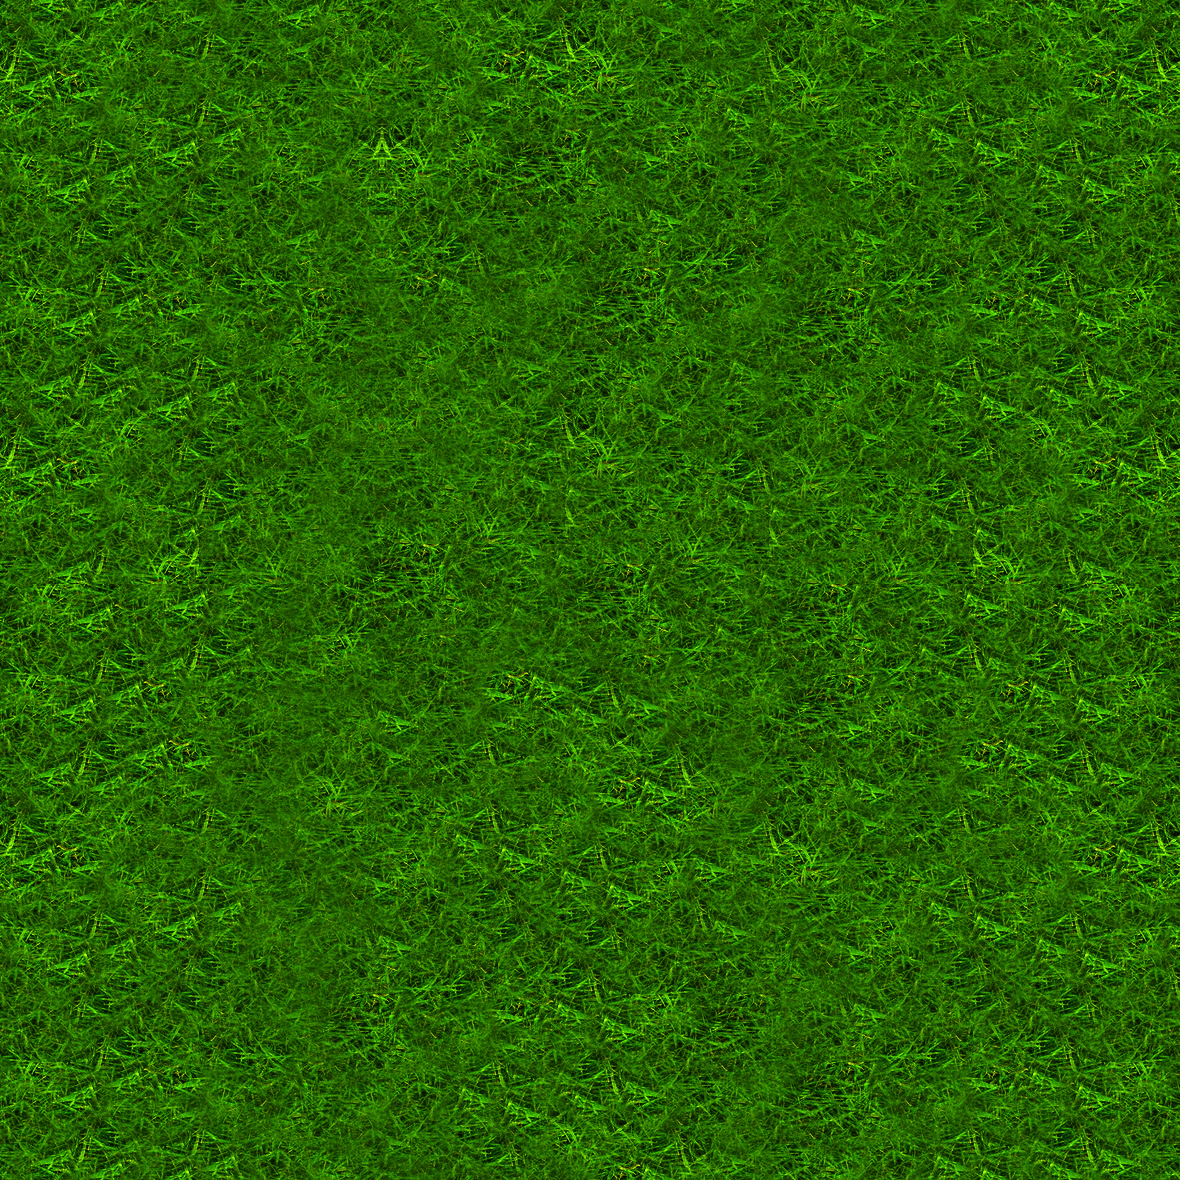 Texture Green Grass Wallpaper For Design And